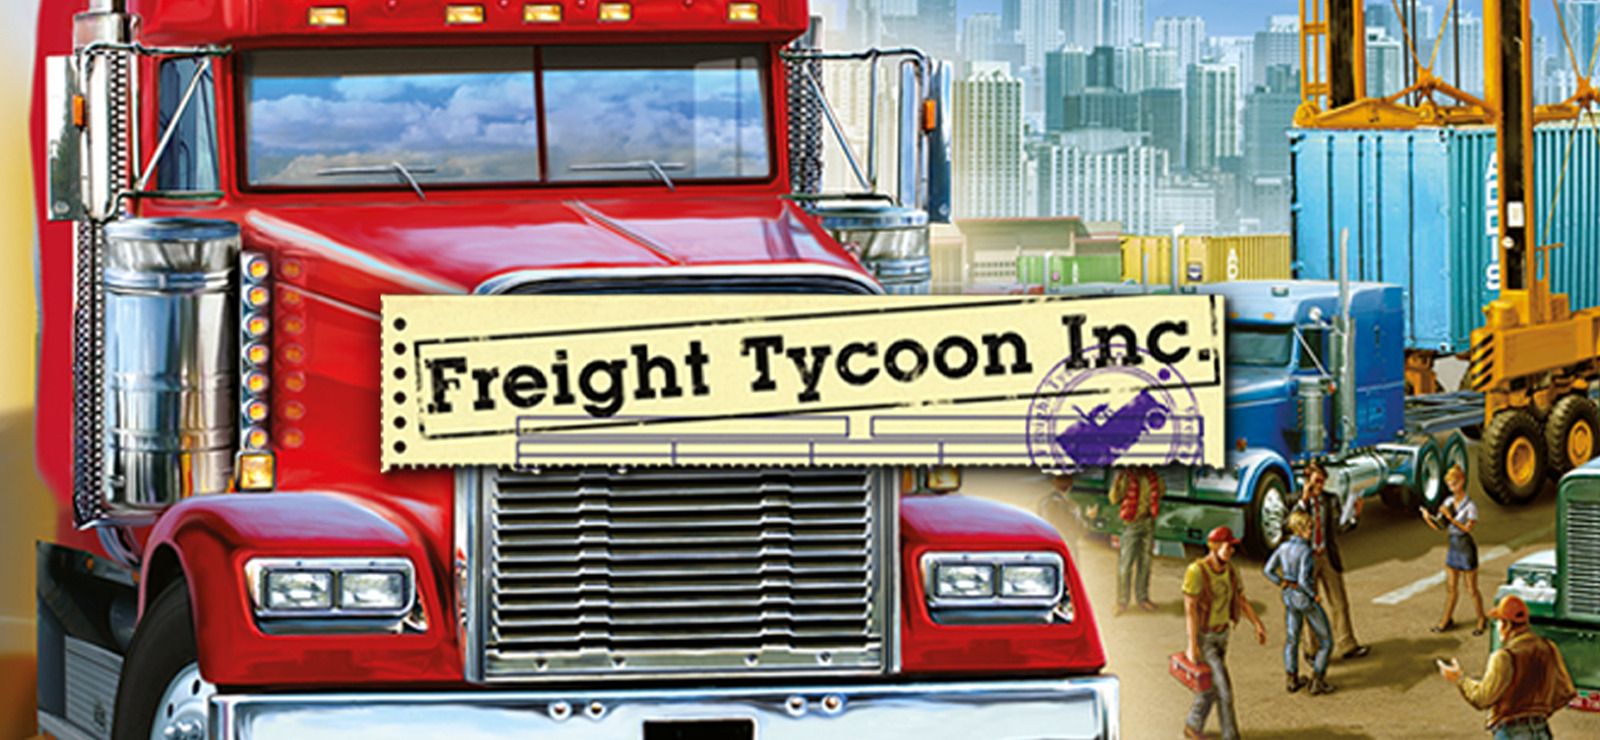 Transport Tycoon Empire Redeem promo codes